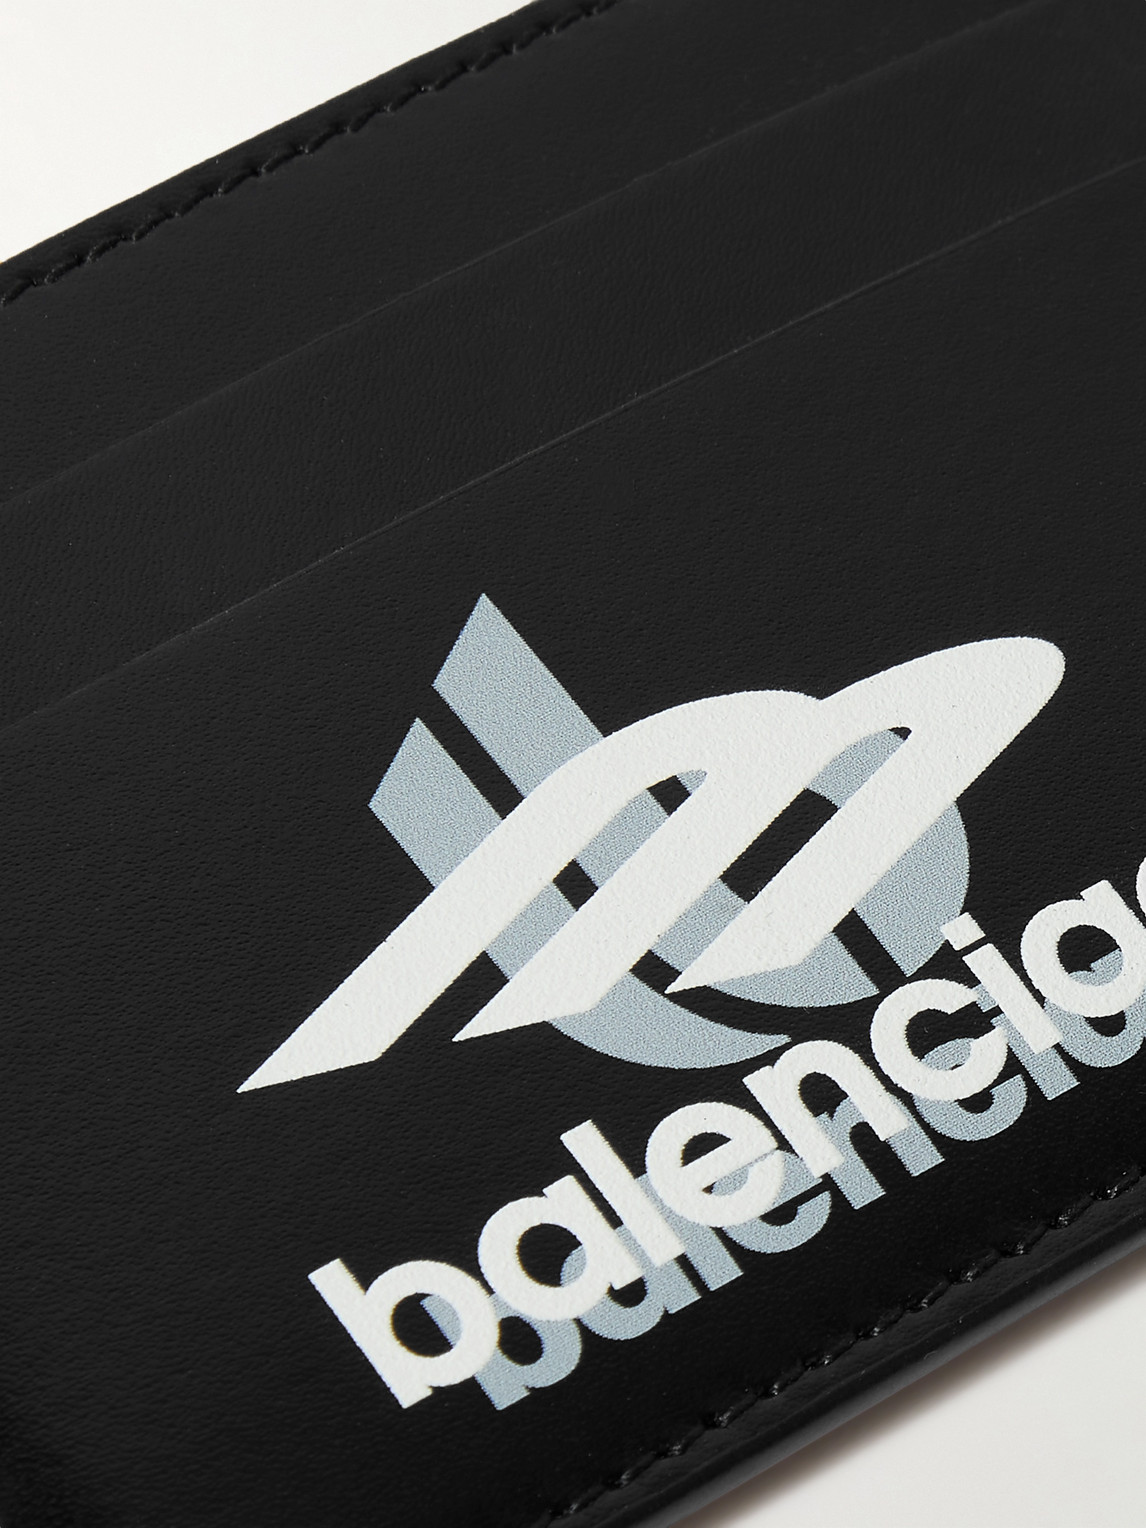 Shop Balenciaga Logo-print Leather Cardholder In Black